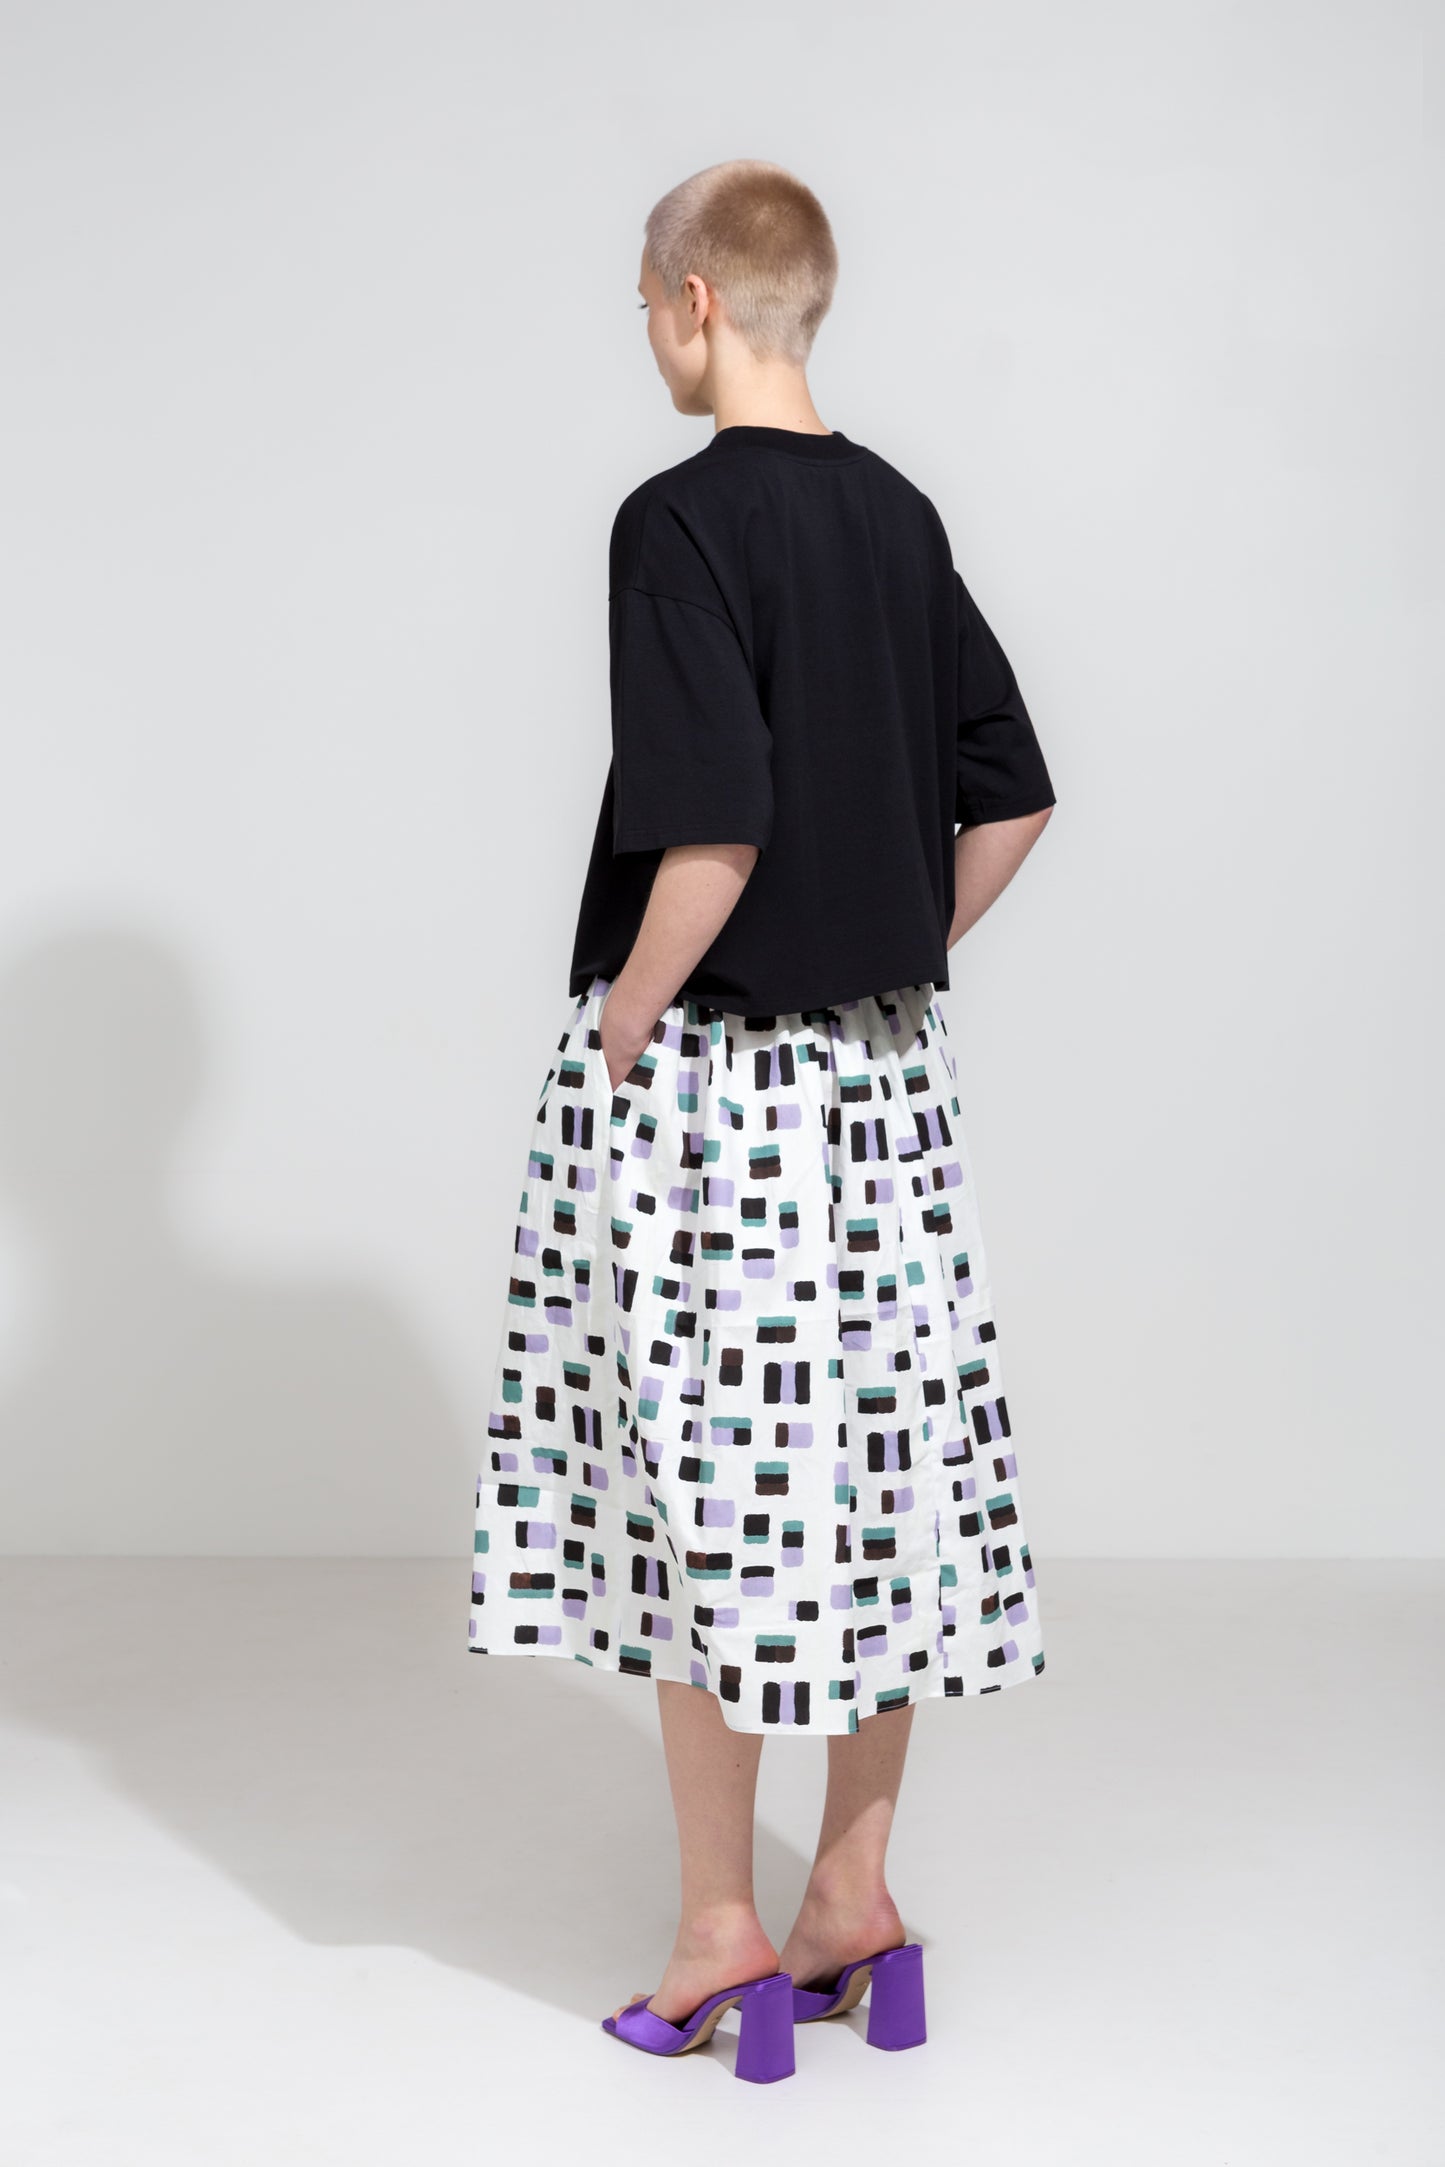 Volumionous midi skirt in print and organic cotton black oversize t-shirt